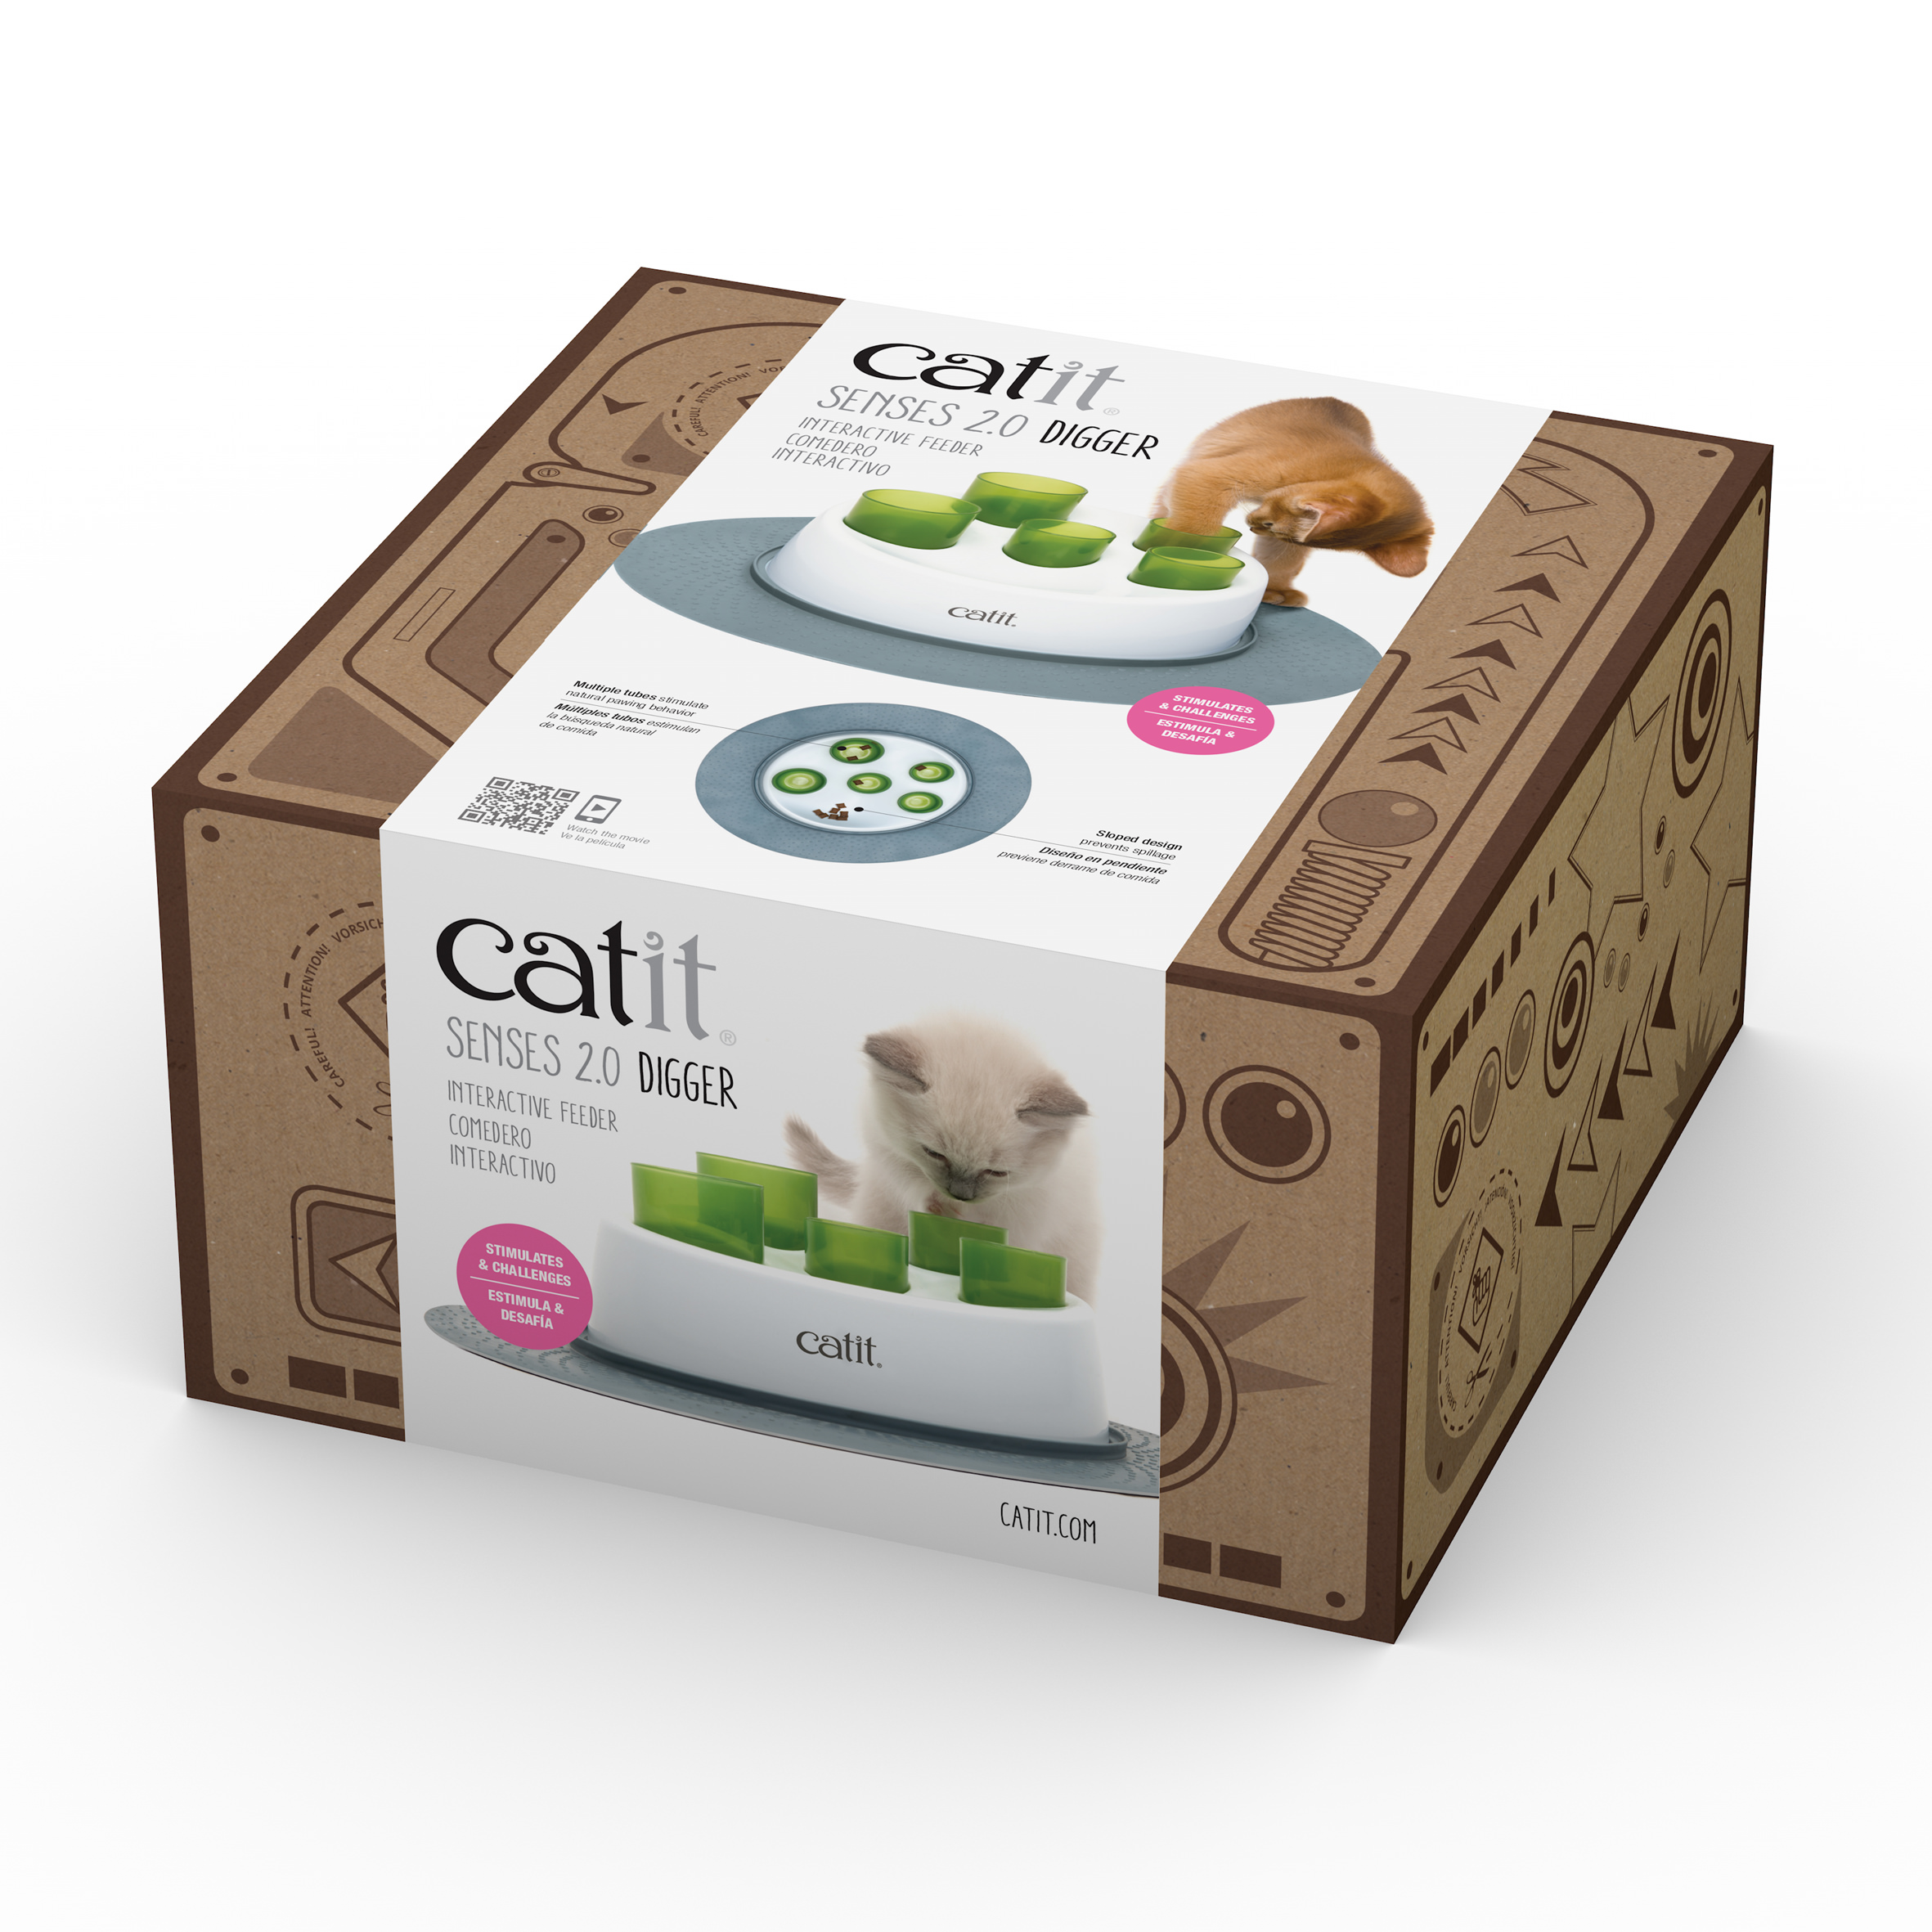 Catit Senses 2.0 Digger Interactive Cat Treat Toy - image 4 of 5